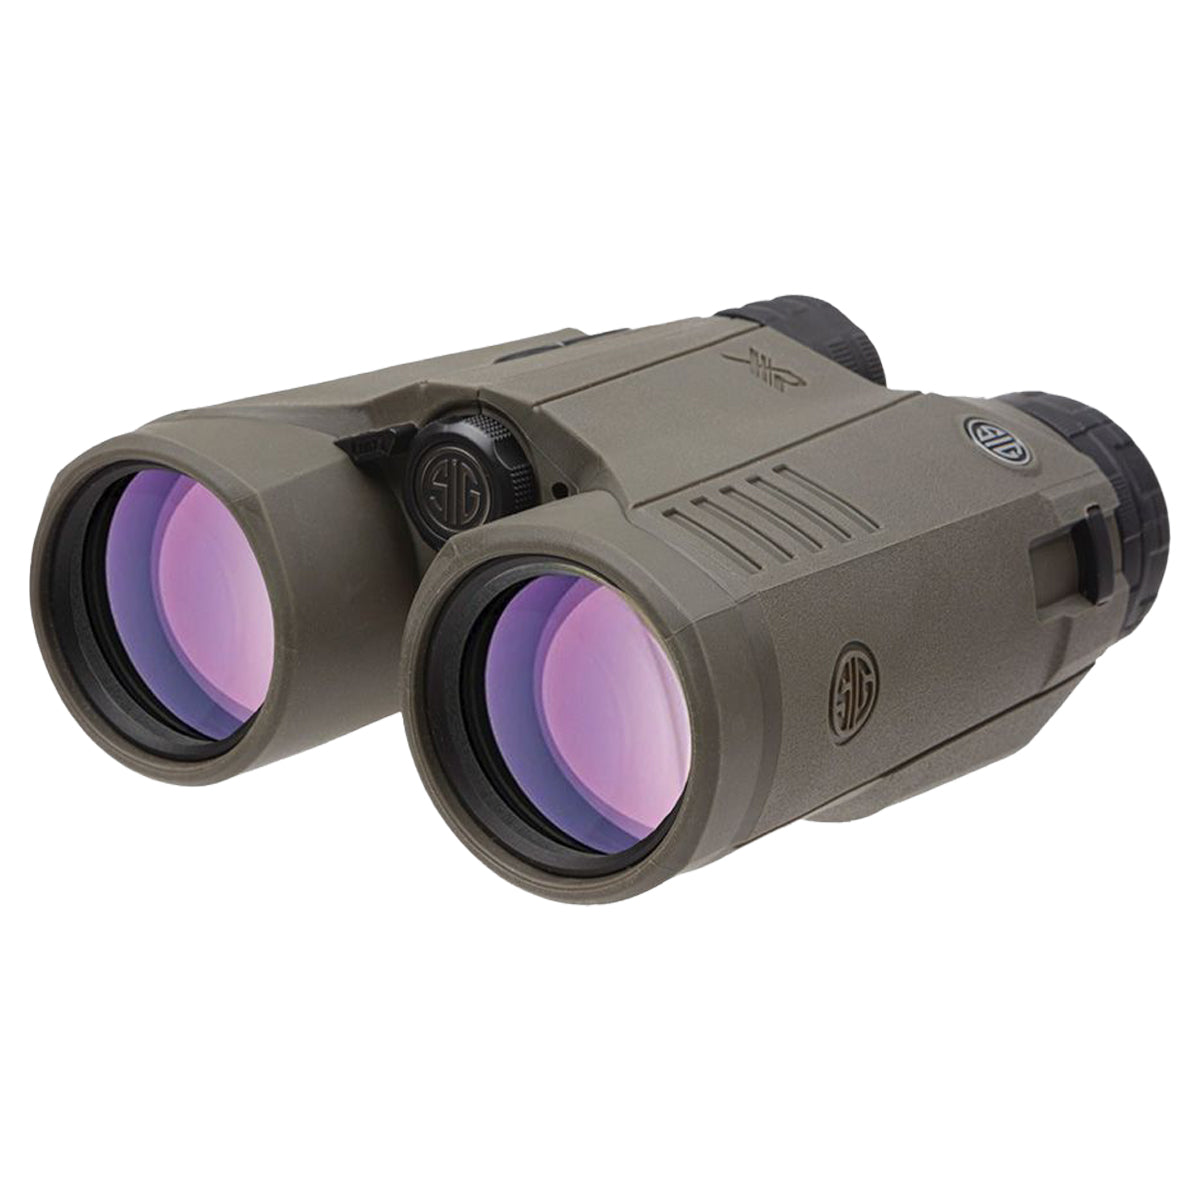 Sig Sauer KILO6K-HD 10x42mm Rangefinding Binocular in  by GOHUNT | Sig Sauer - GOHUNT Shop